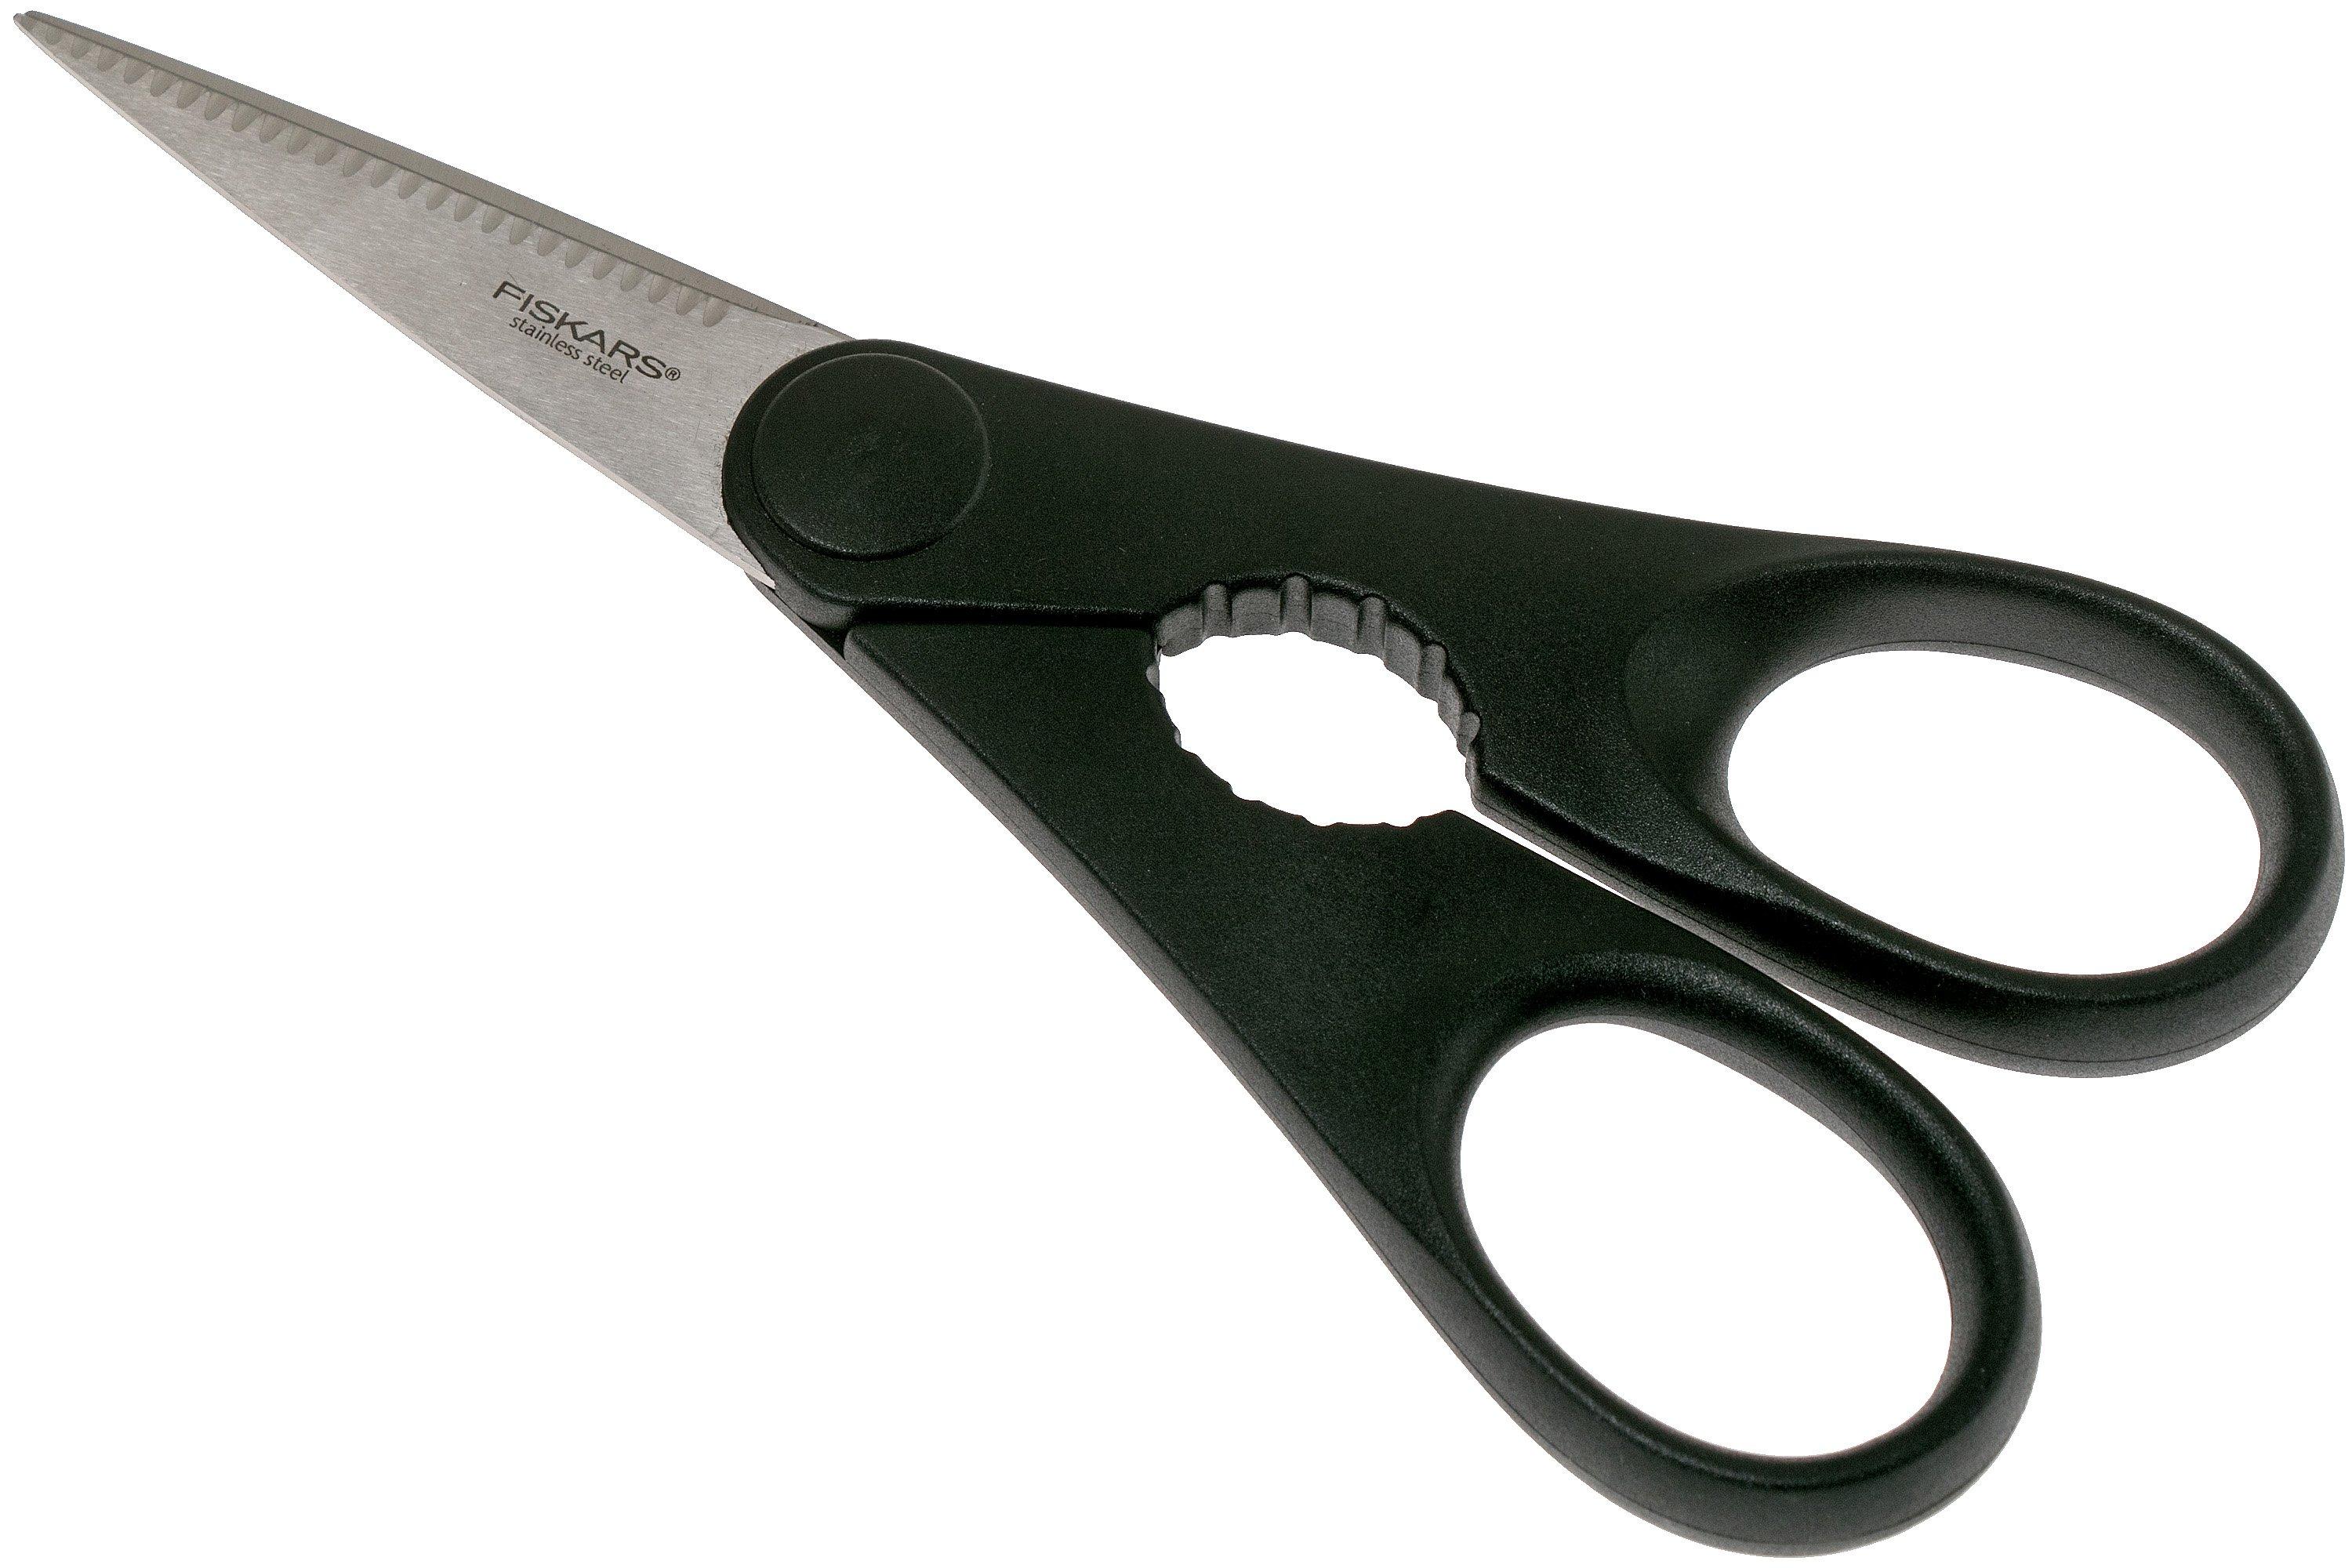 Fiskars KitchenSmart Essential kitchen scissors